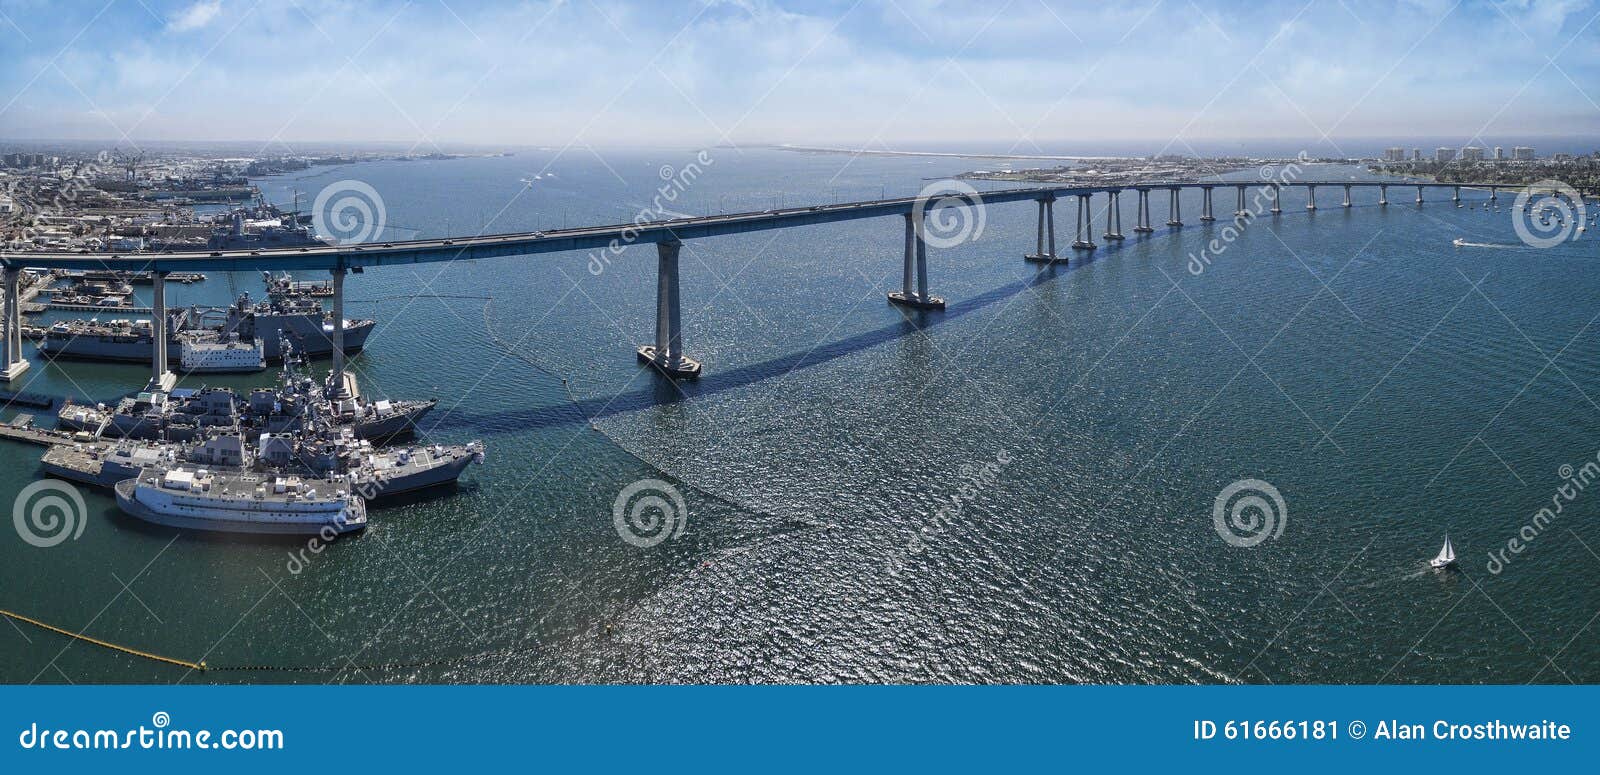 coronado bay bridge panoramic